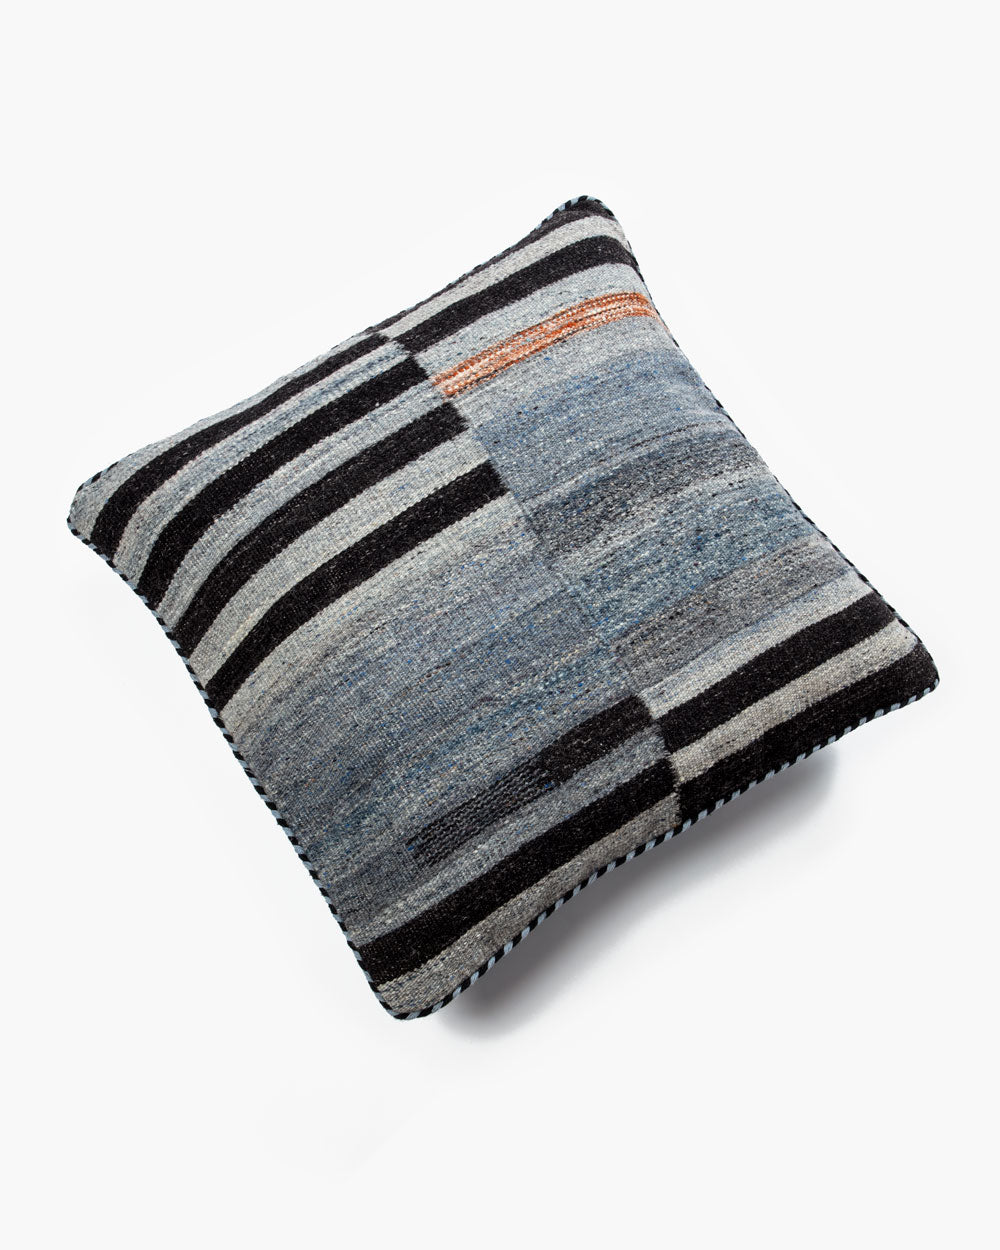 RAIN XL Floor Pillow - with edge detail